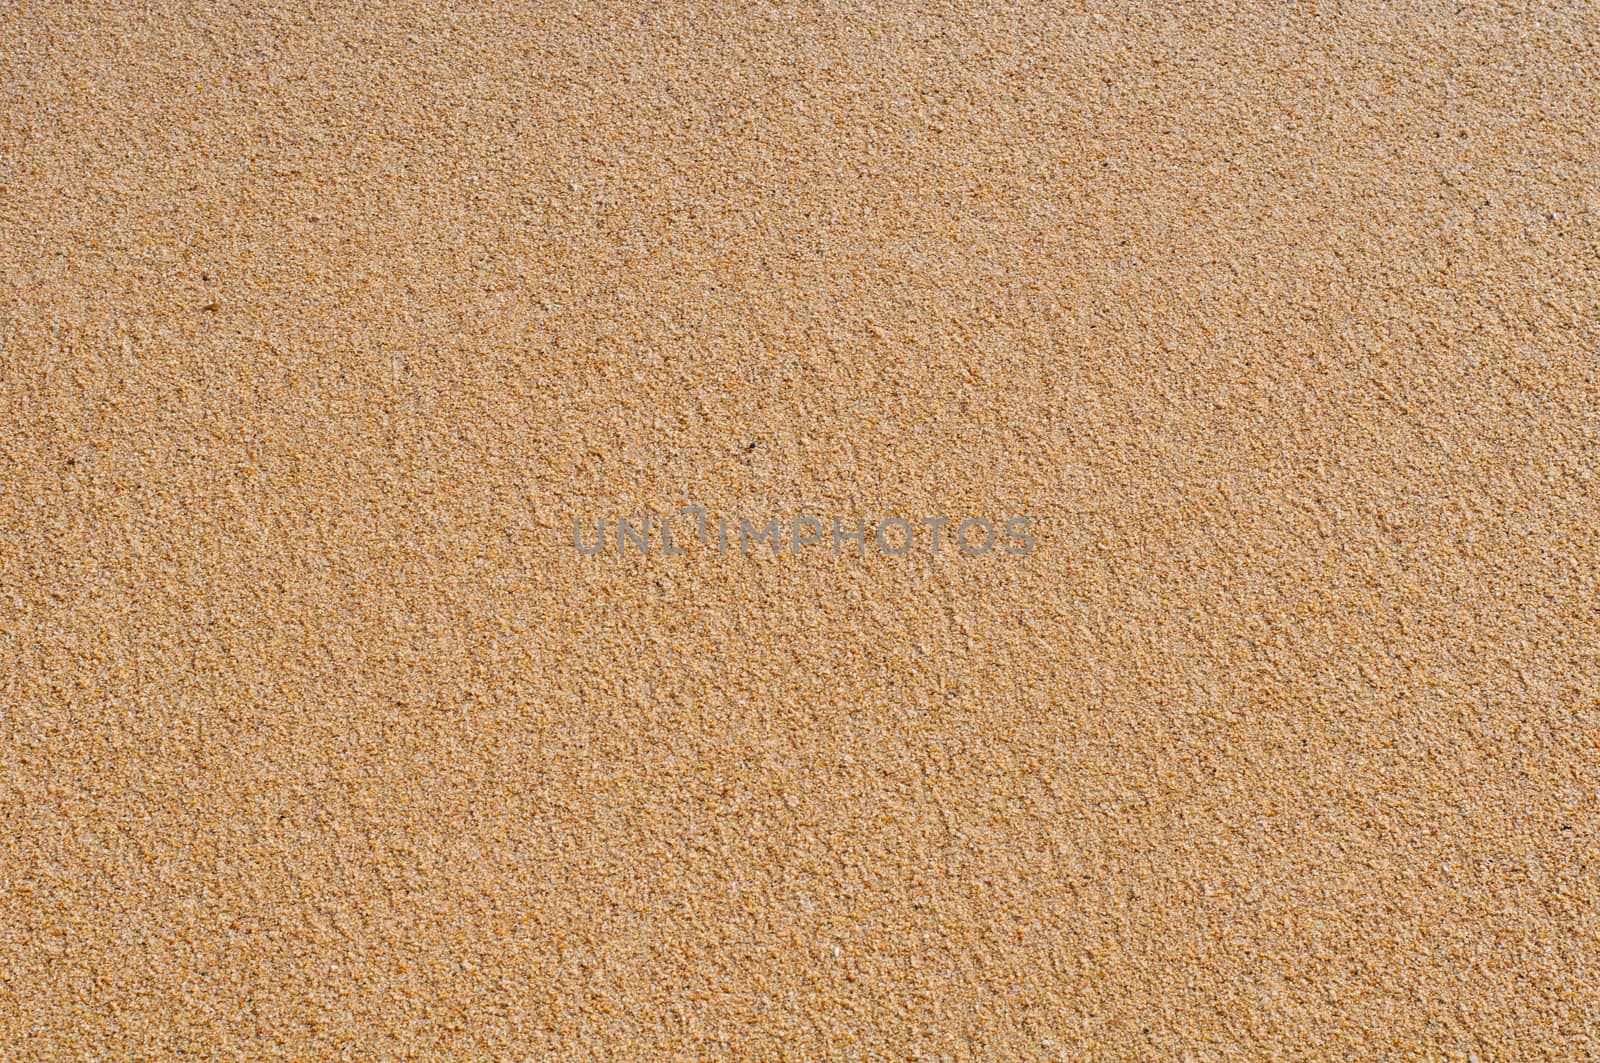 Coarse sand background by Sorapop